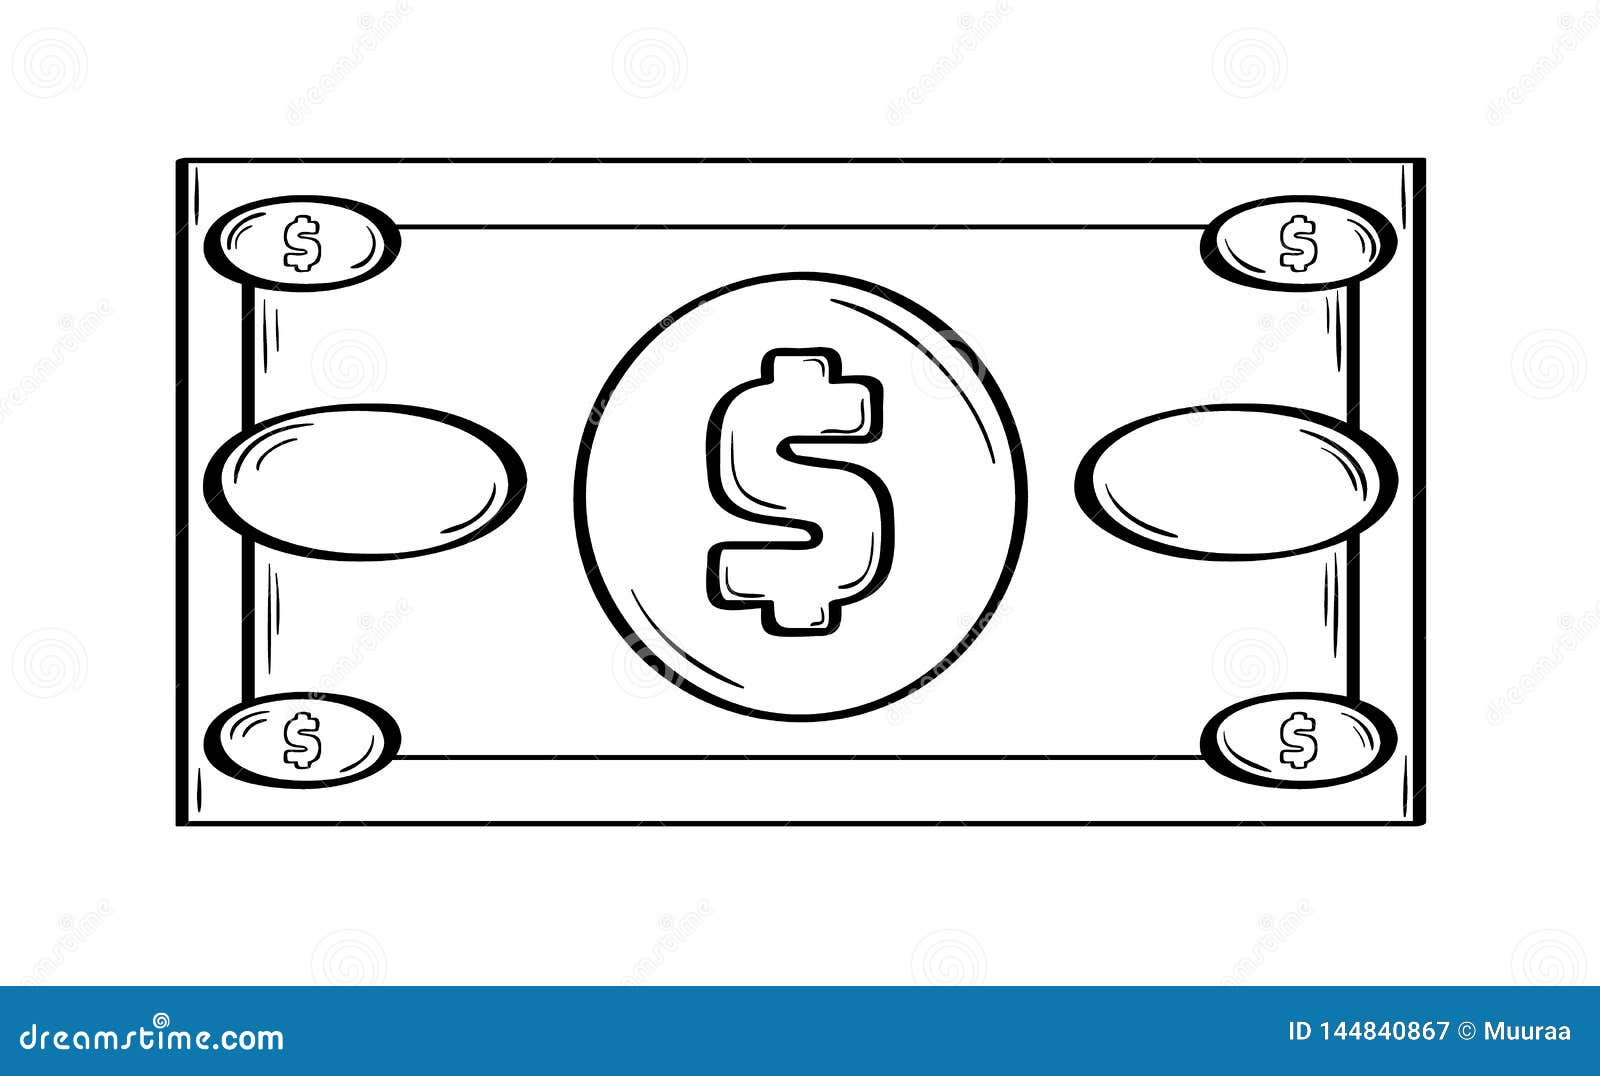 Paper Money with Dollar Symbol Stock Illustration - Illustration of ...